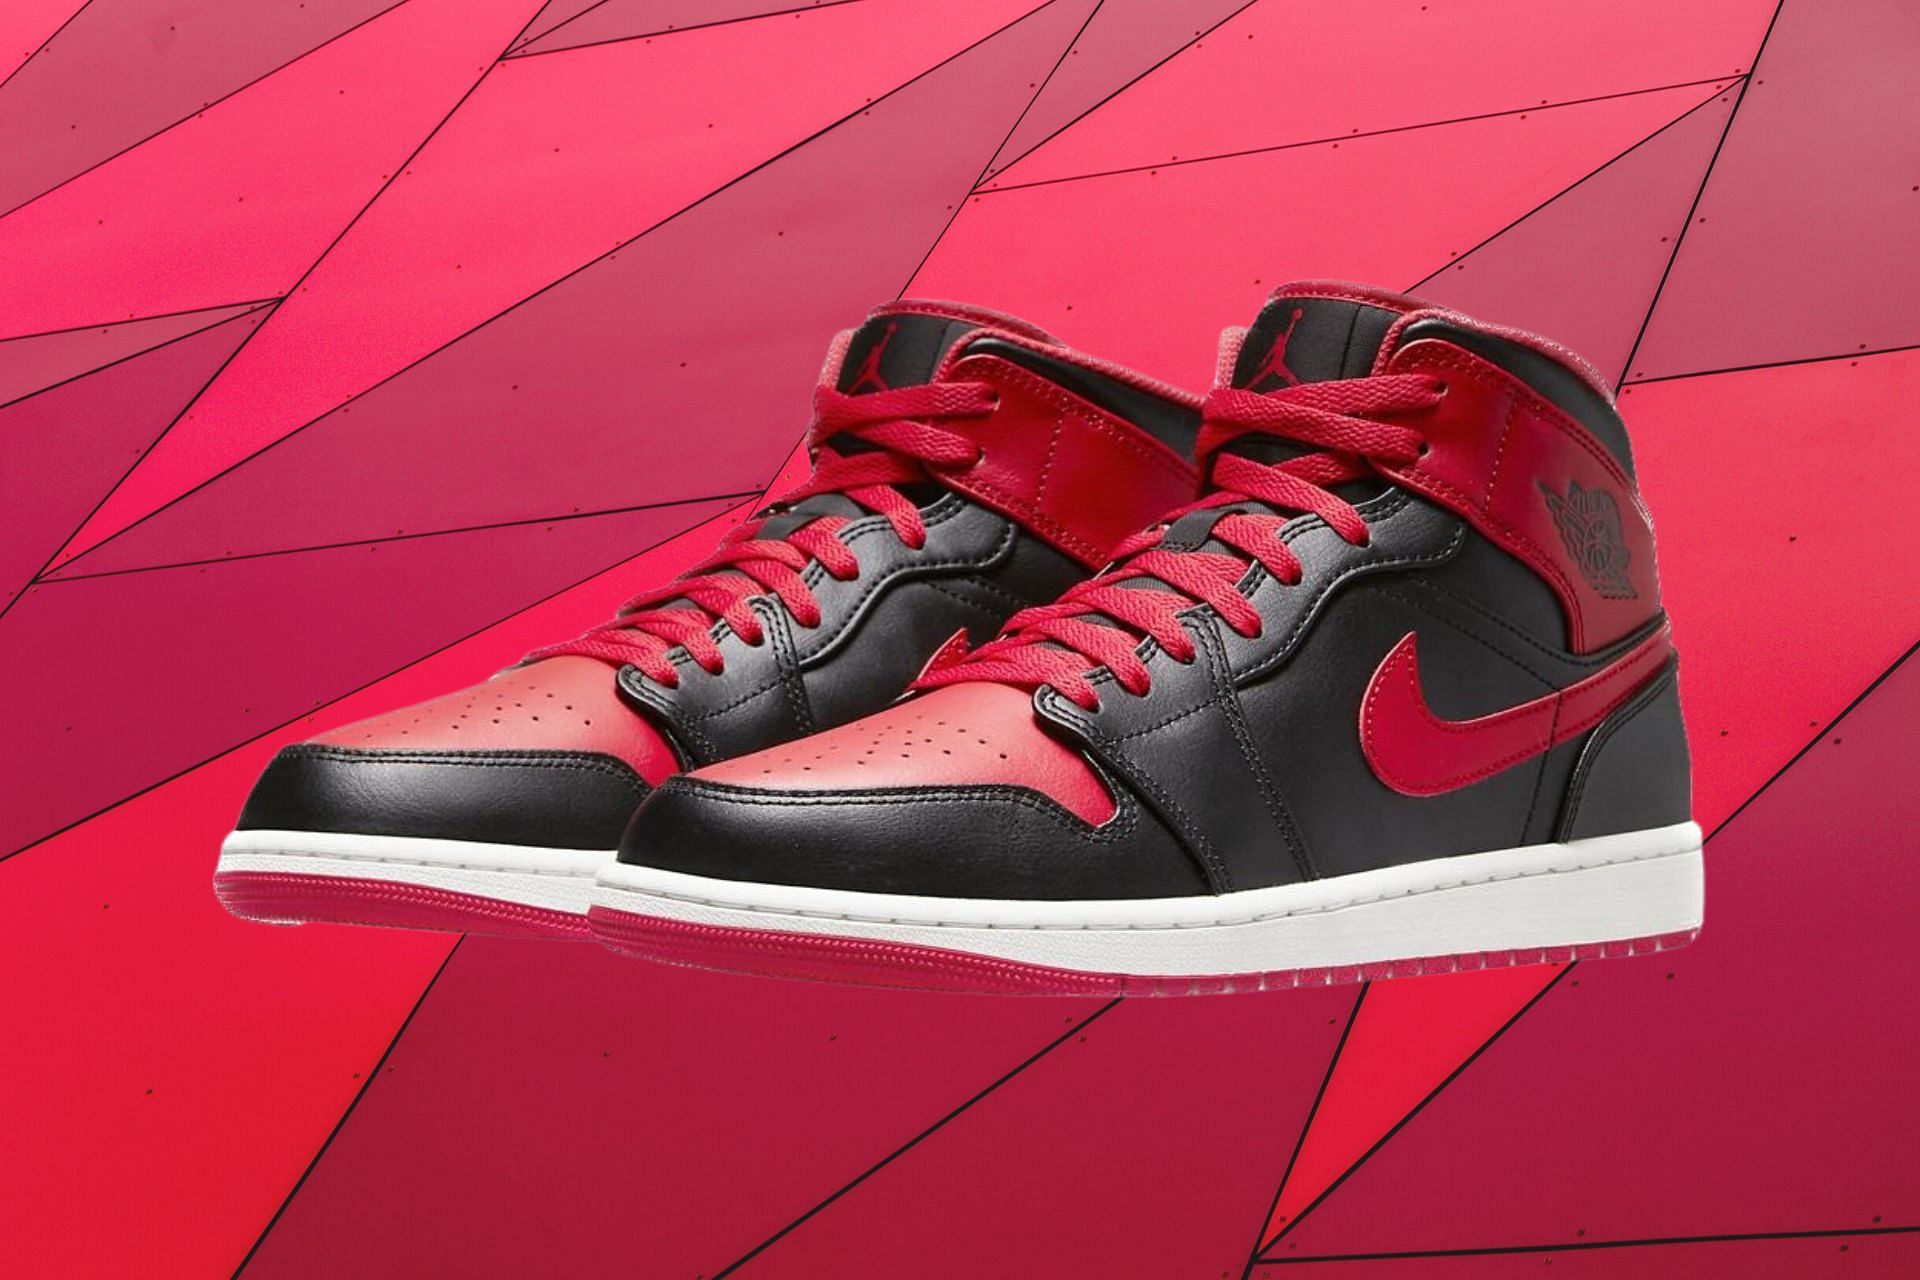 Air Jordan 1 Mid Alternate Bred shoes (Image via Nike)